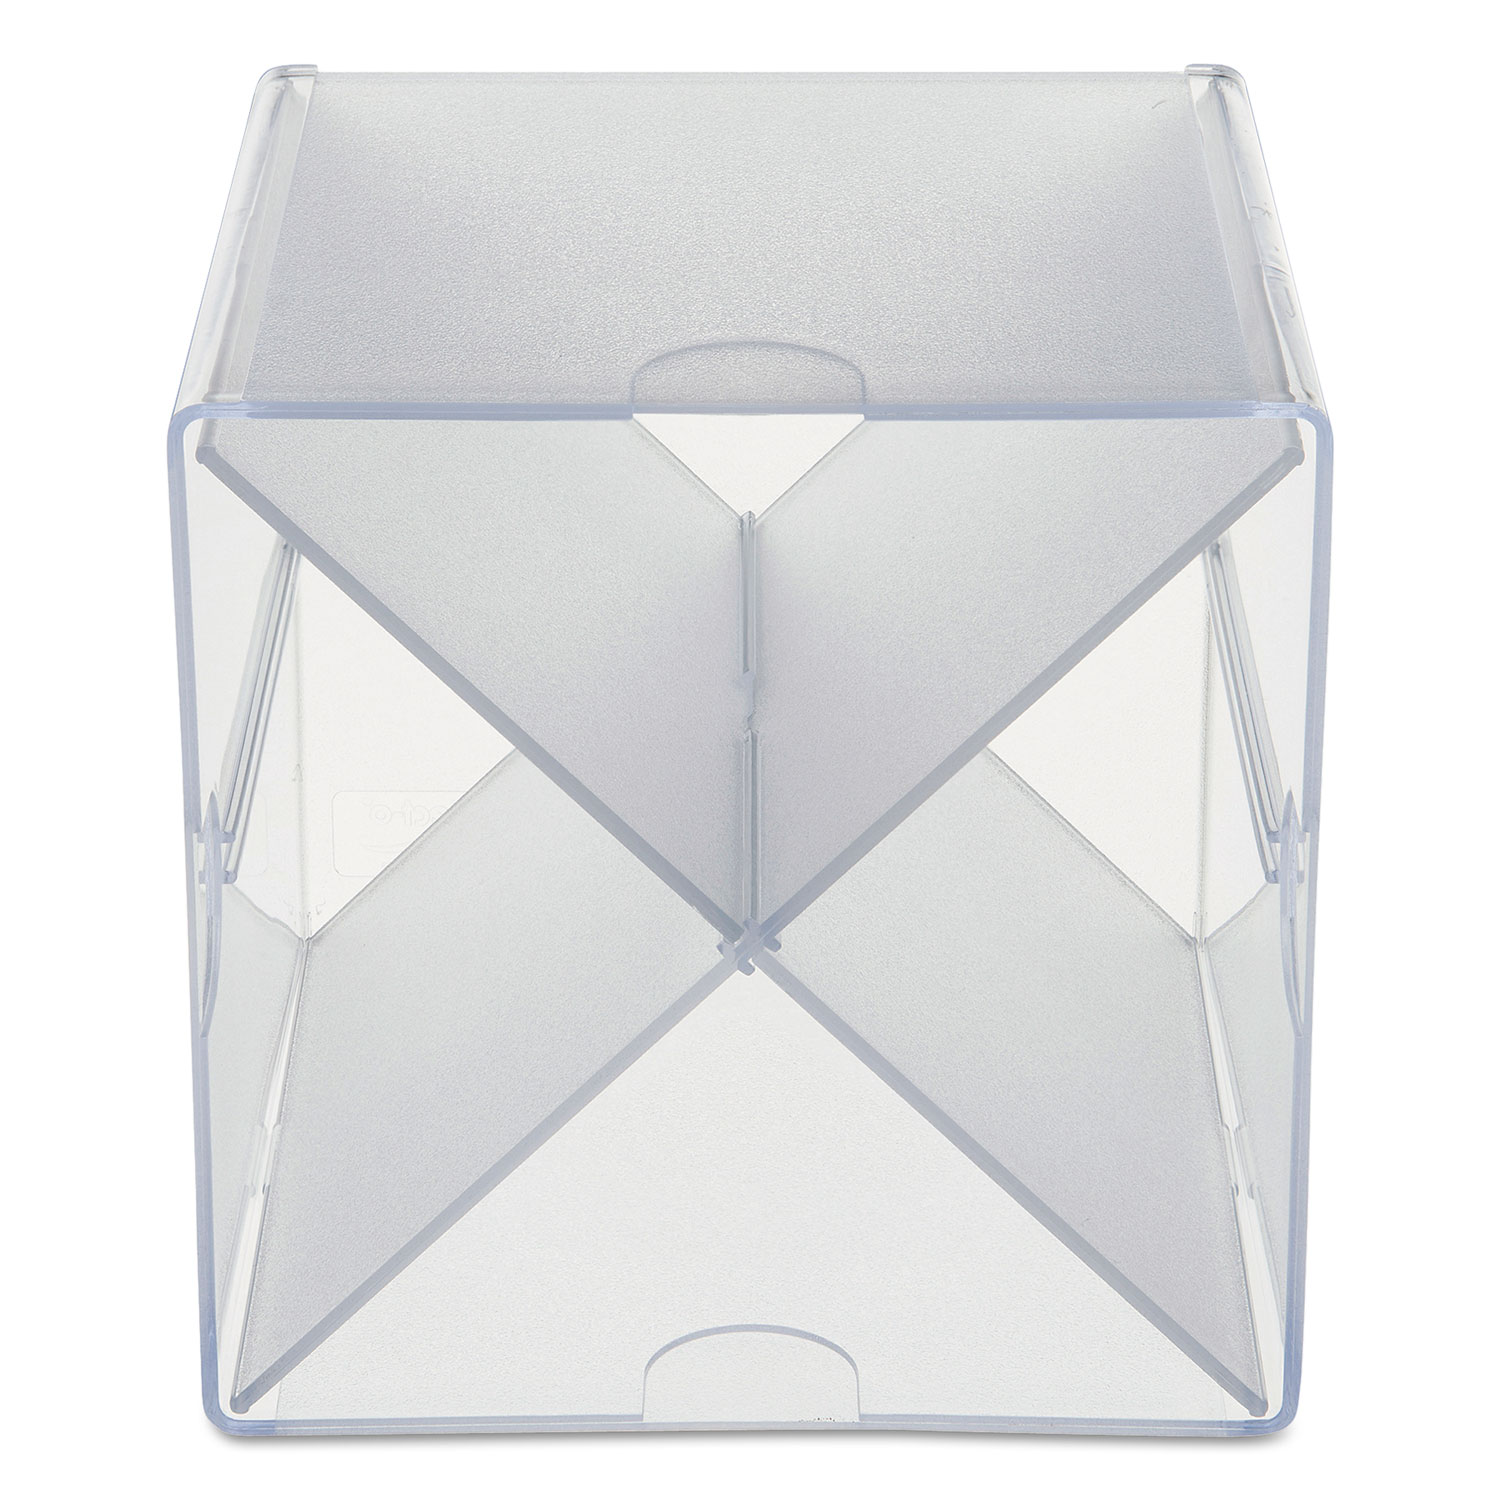 Stackable Cube Organizer, X Divider, 4 Compartments, Plastic, 6 x